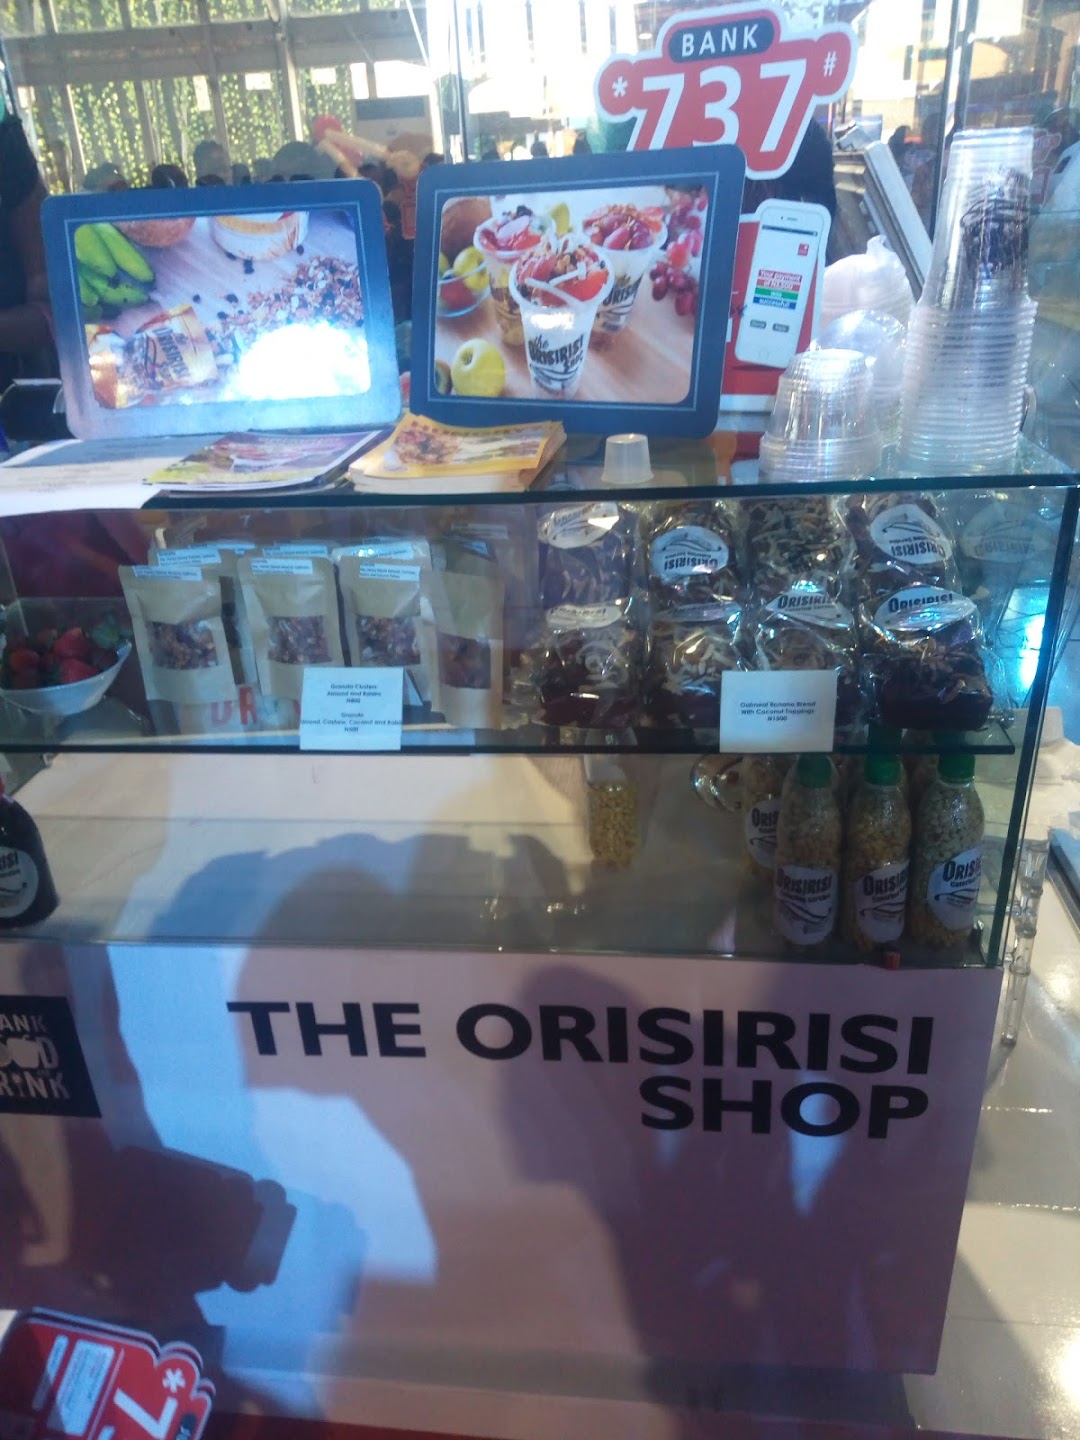 The Orisirisi Shop